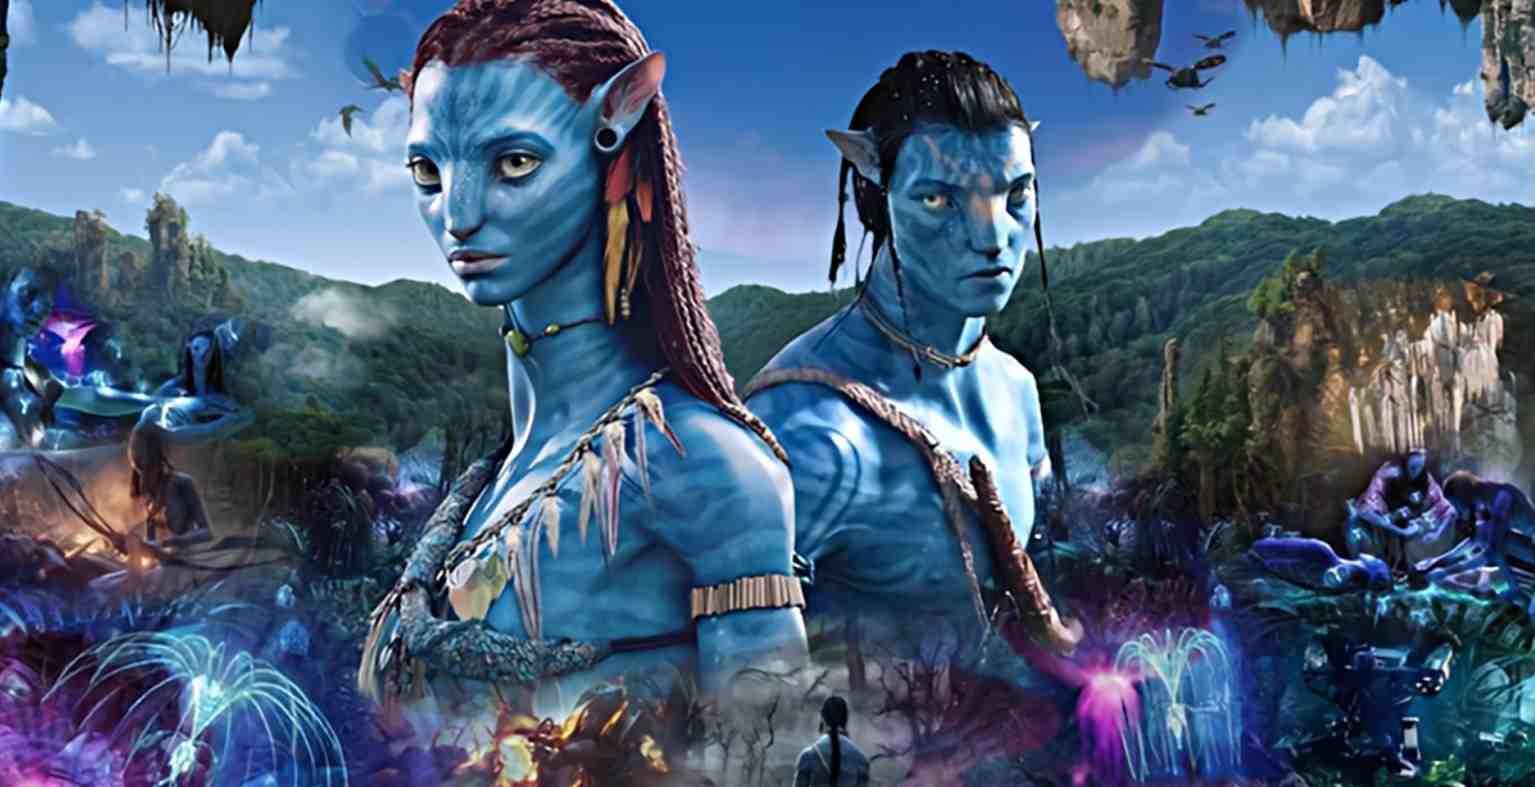 Avatar2 3 Days Telugu States Collections!